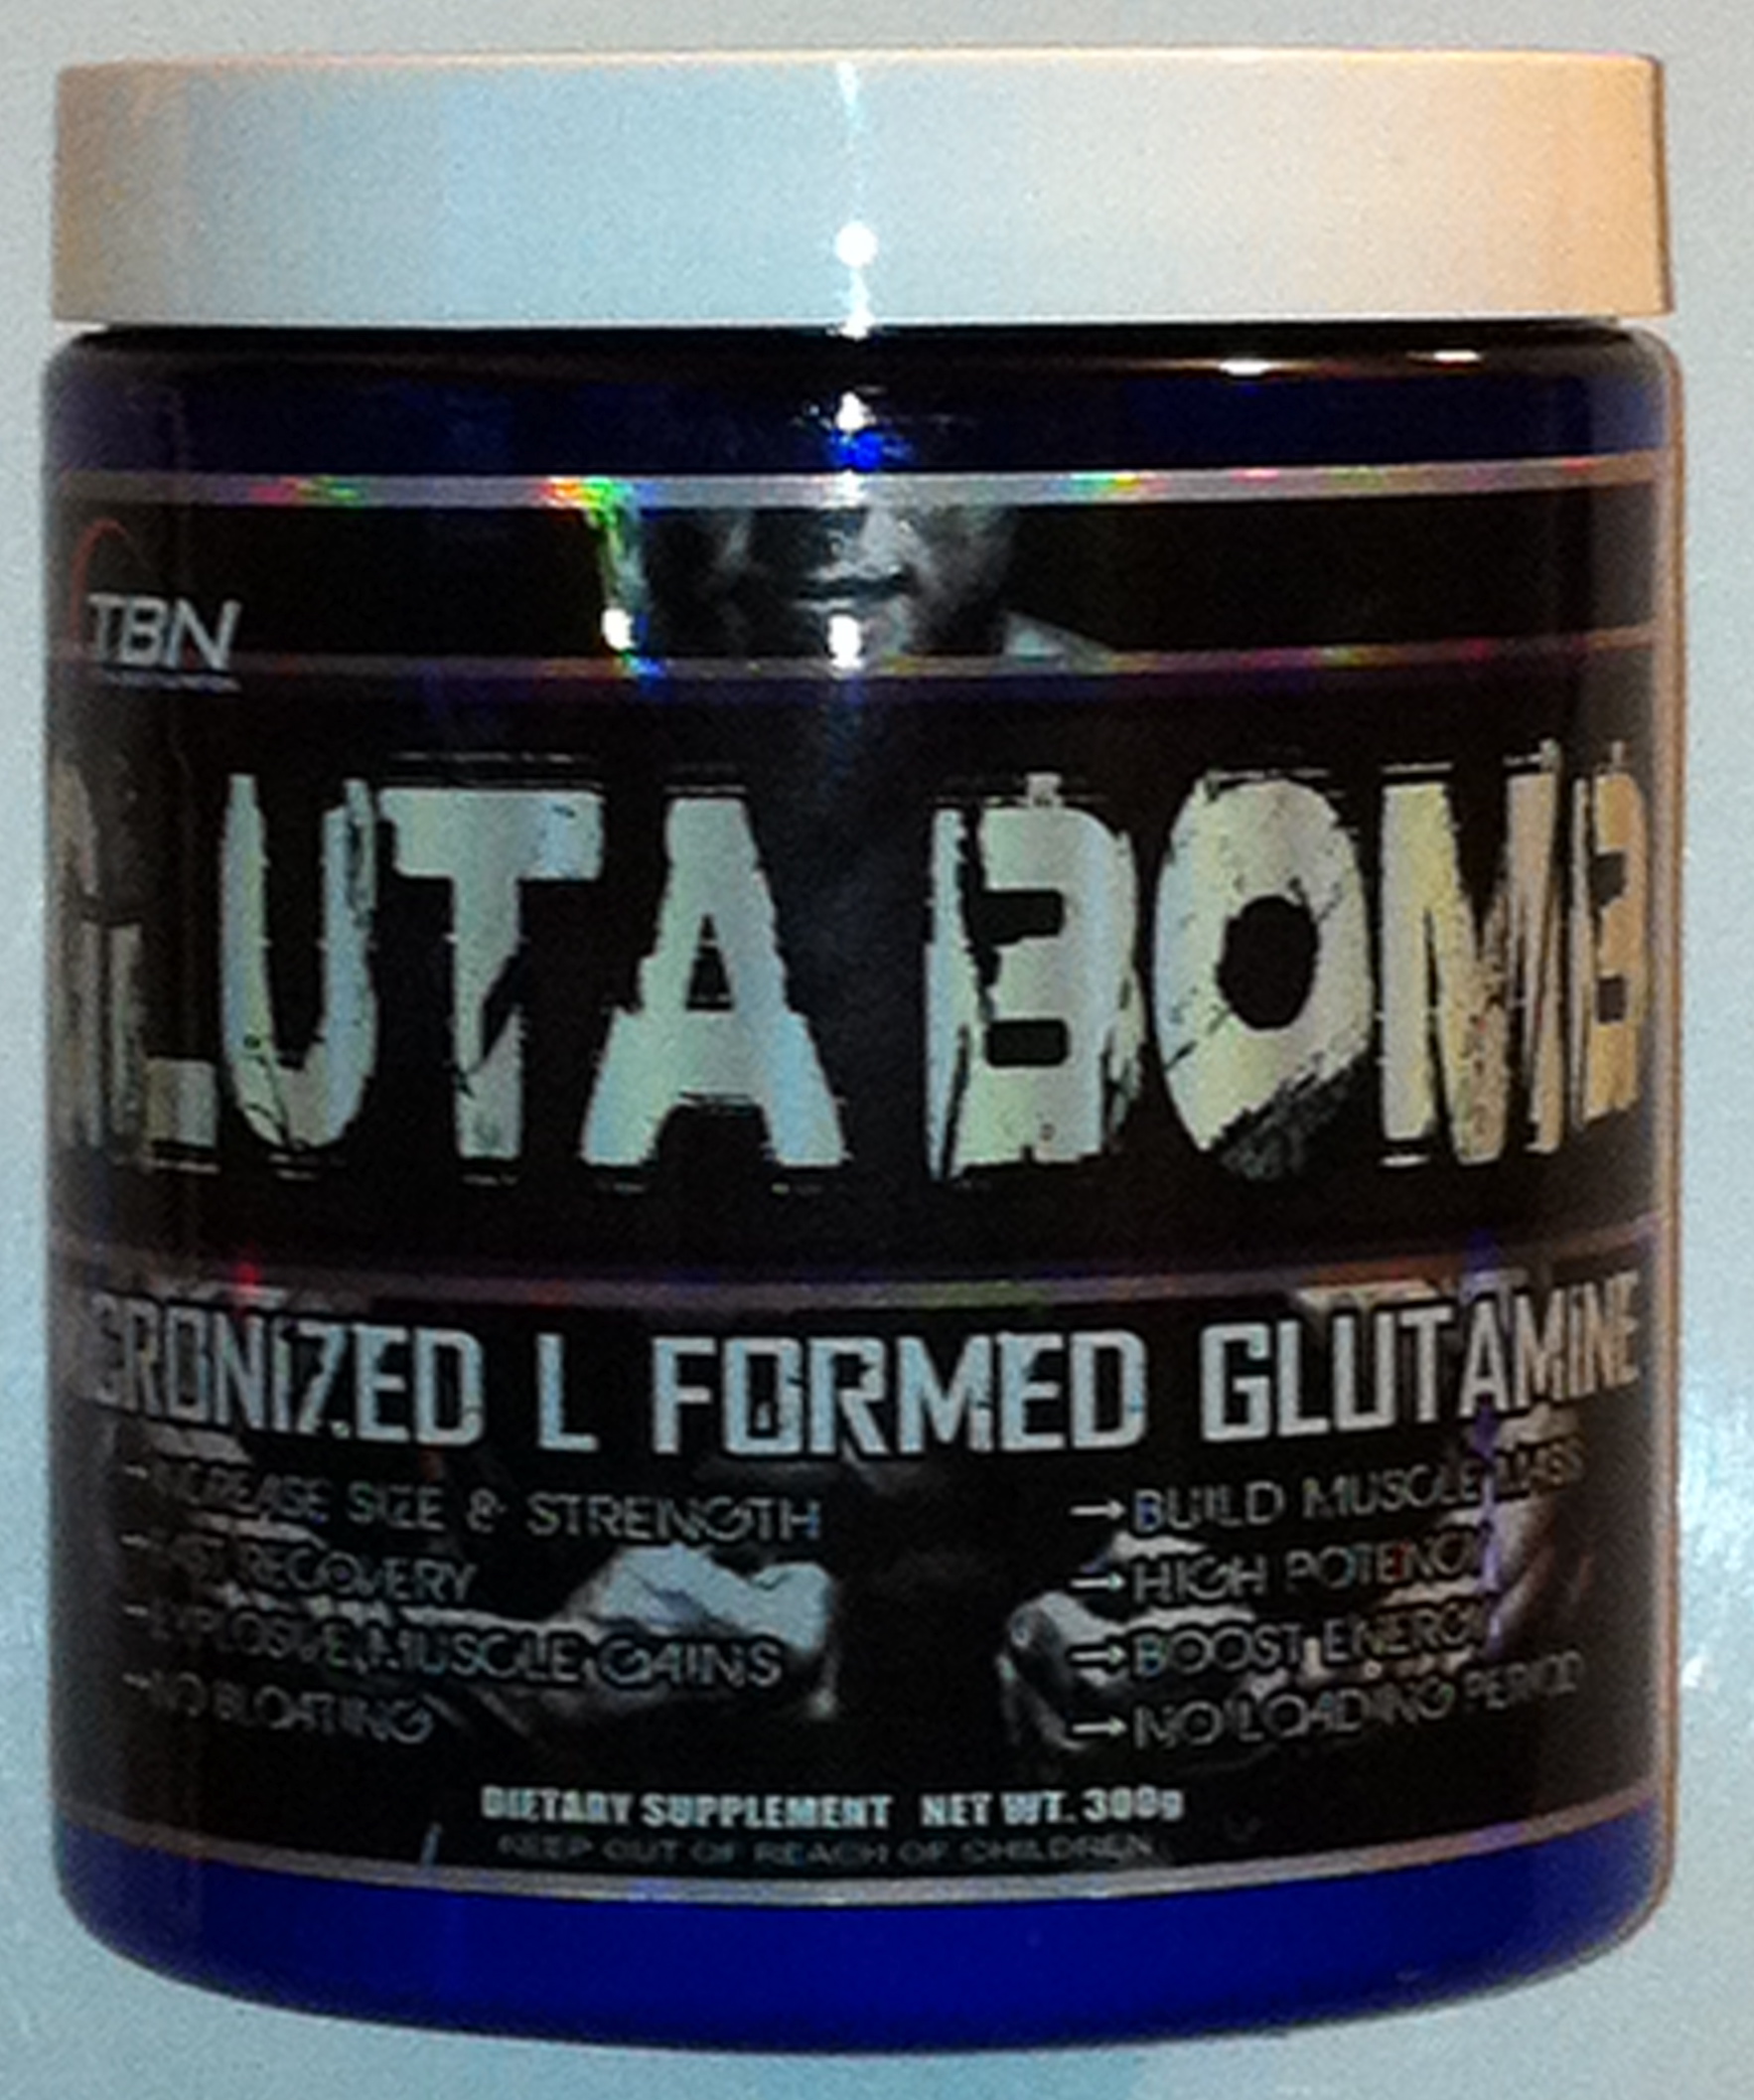 L Glutamine Gluta Bomb Micronized L Formed Glutamine large image 0